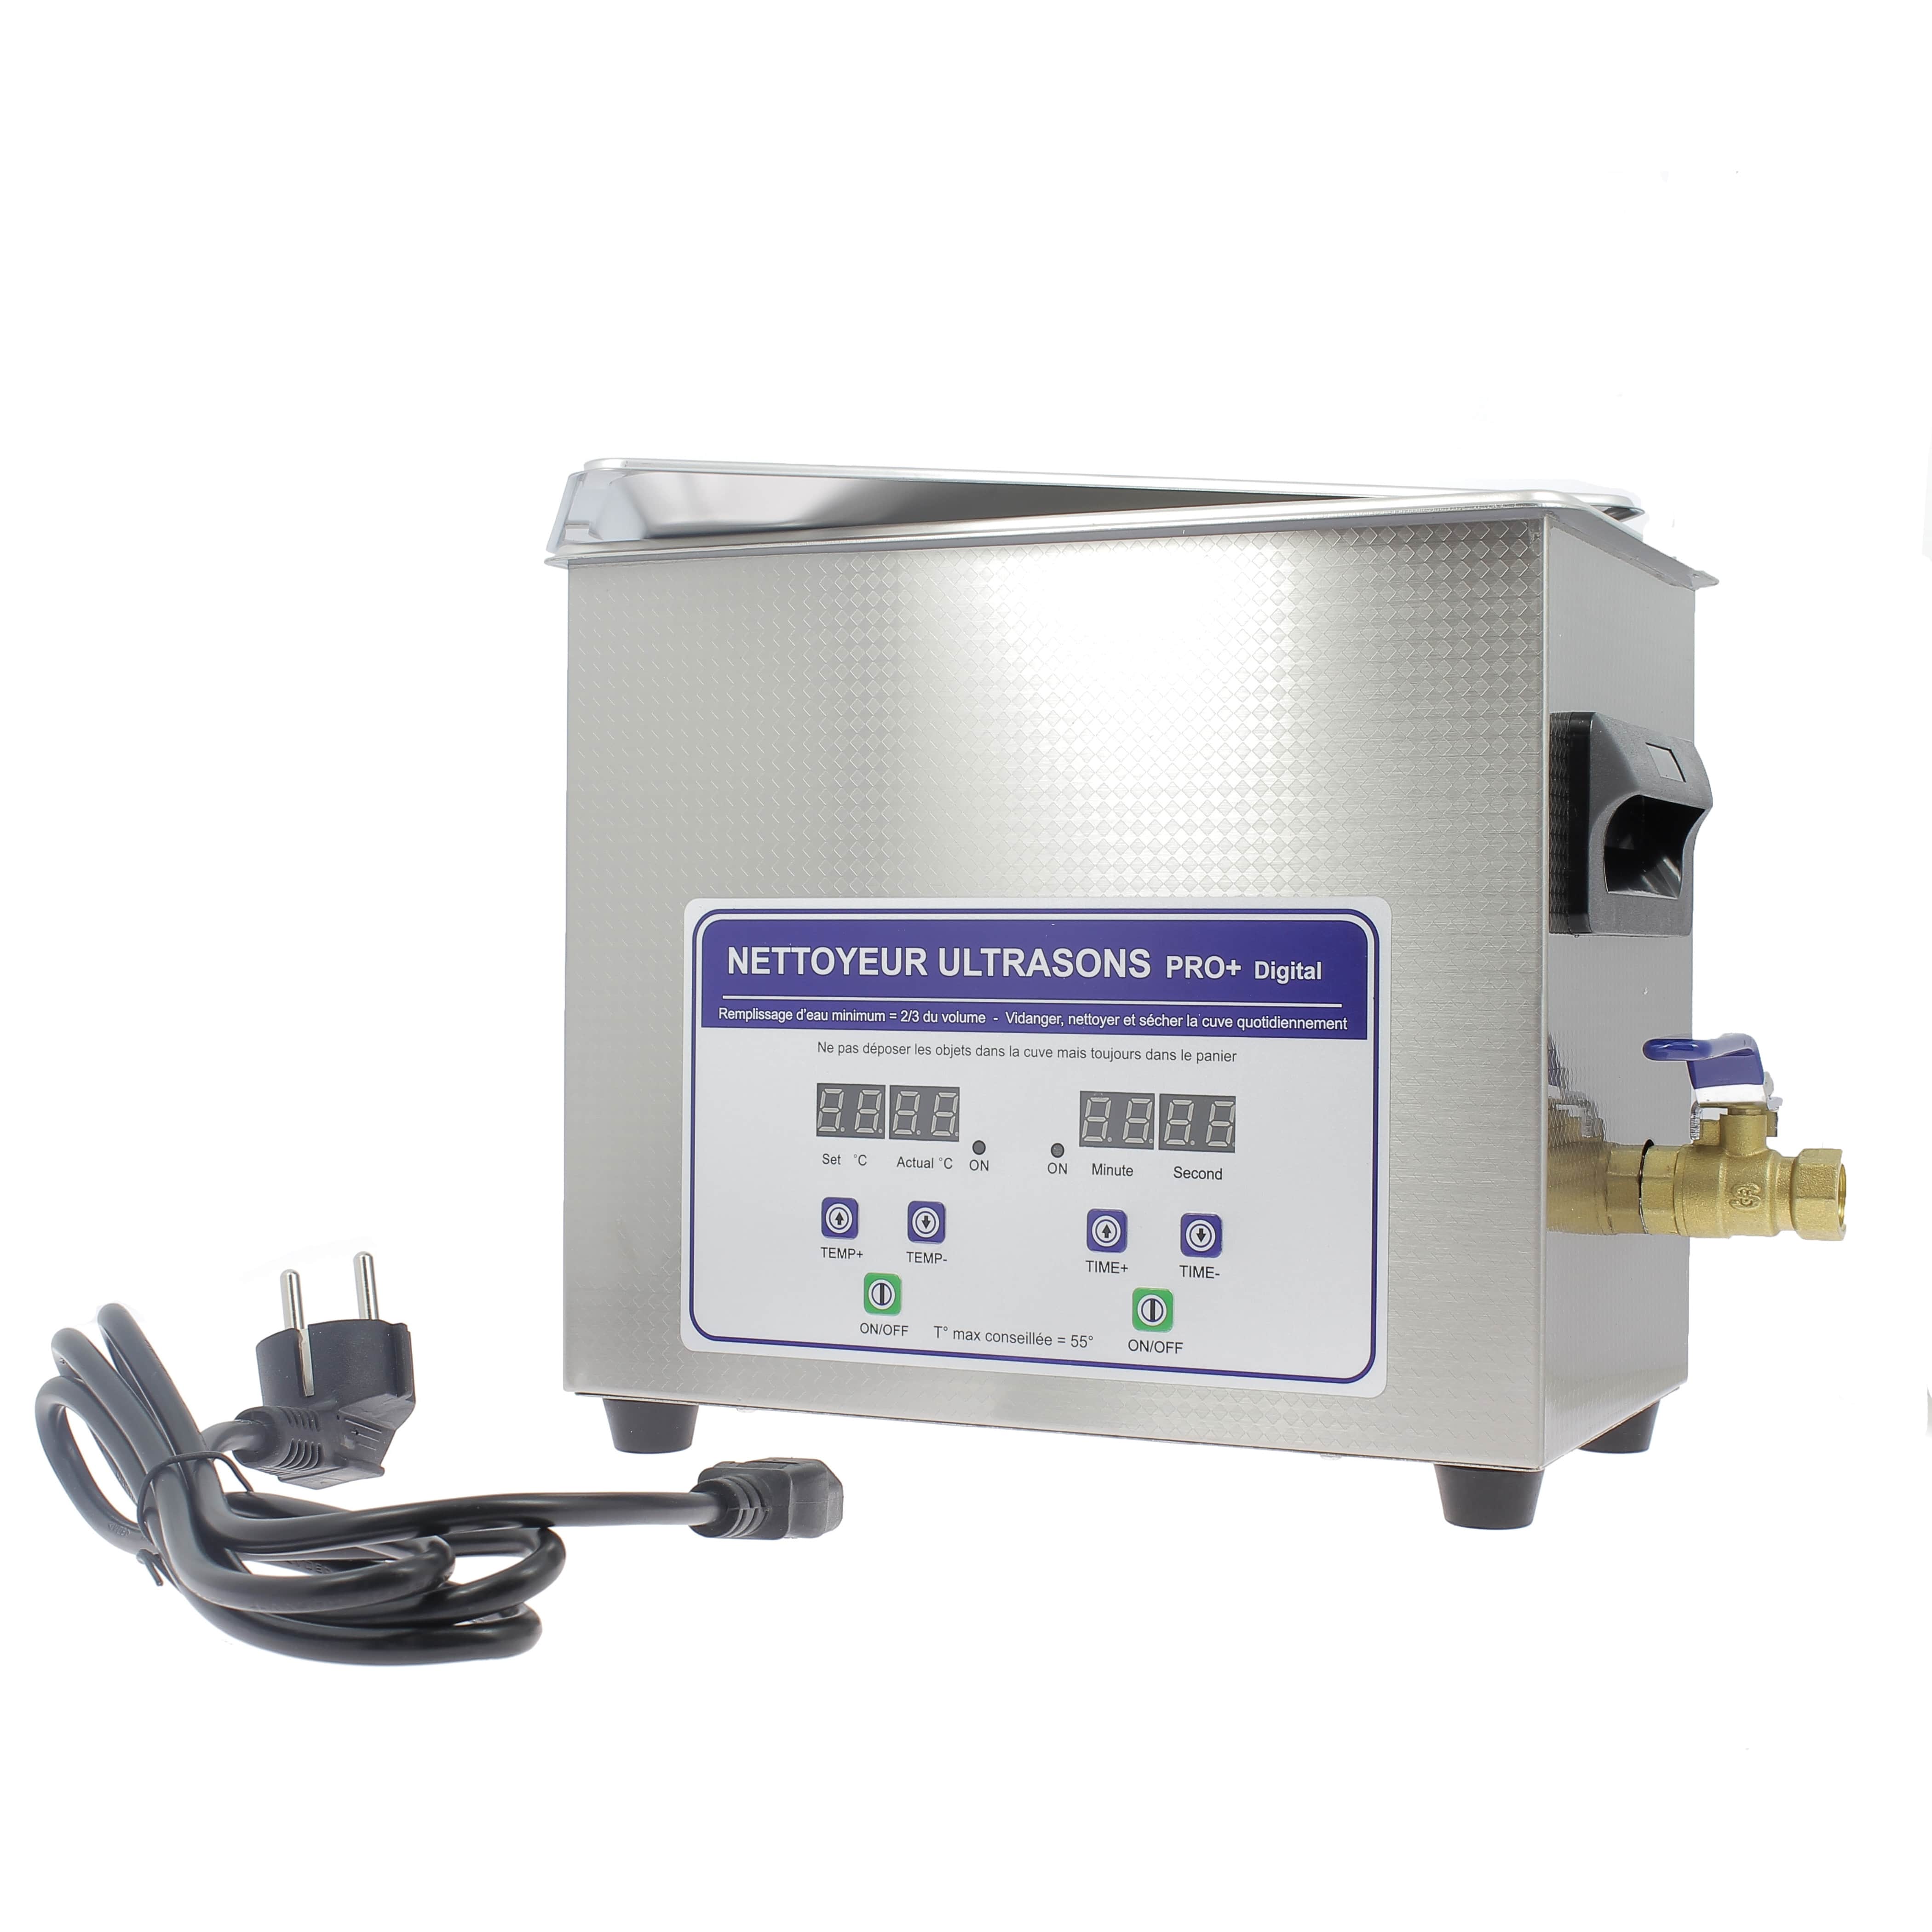 Nettoyeur Ultrasons PRO 30L - AFS - Application Fast Set